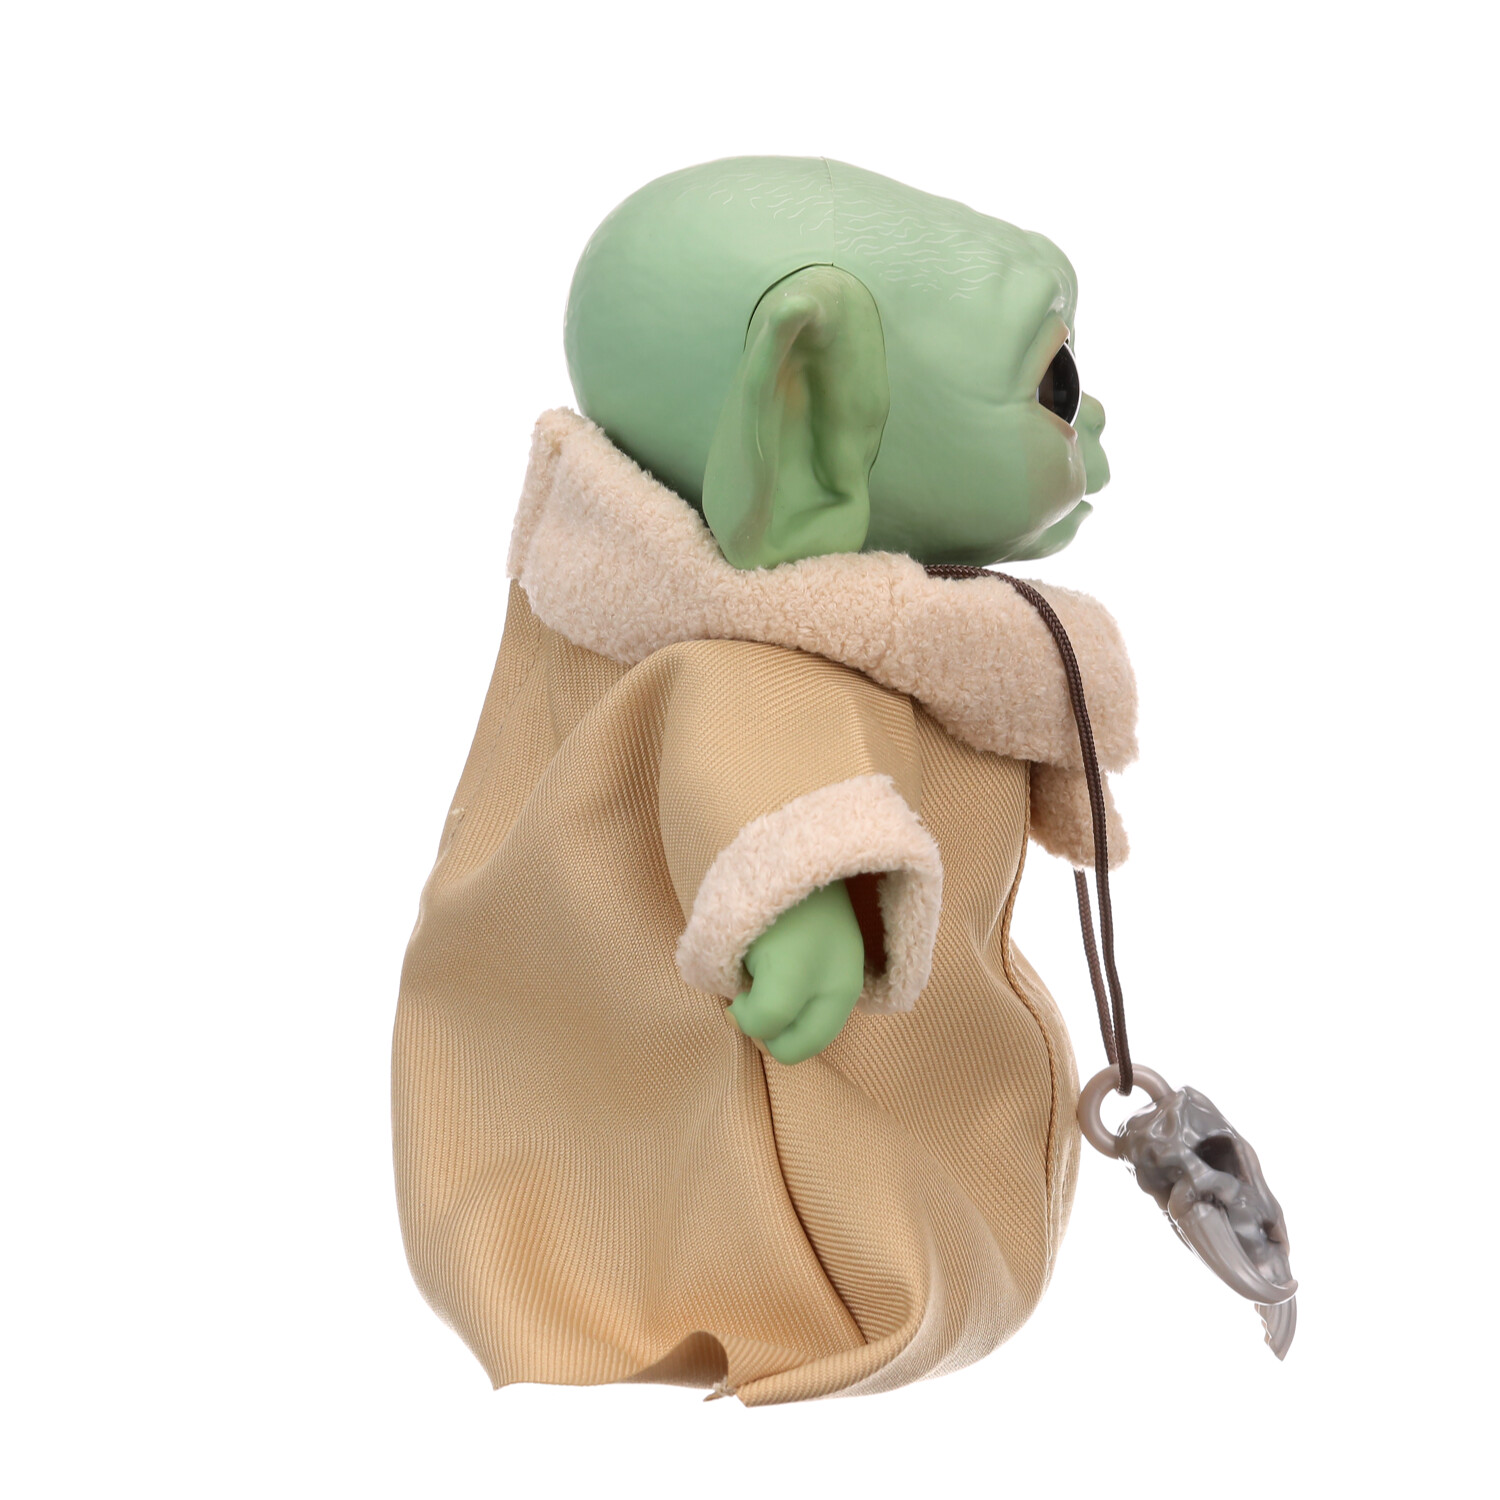 Figura Mandaloriana The Child Yoda Animatronic Interactive — Juguetesland